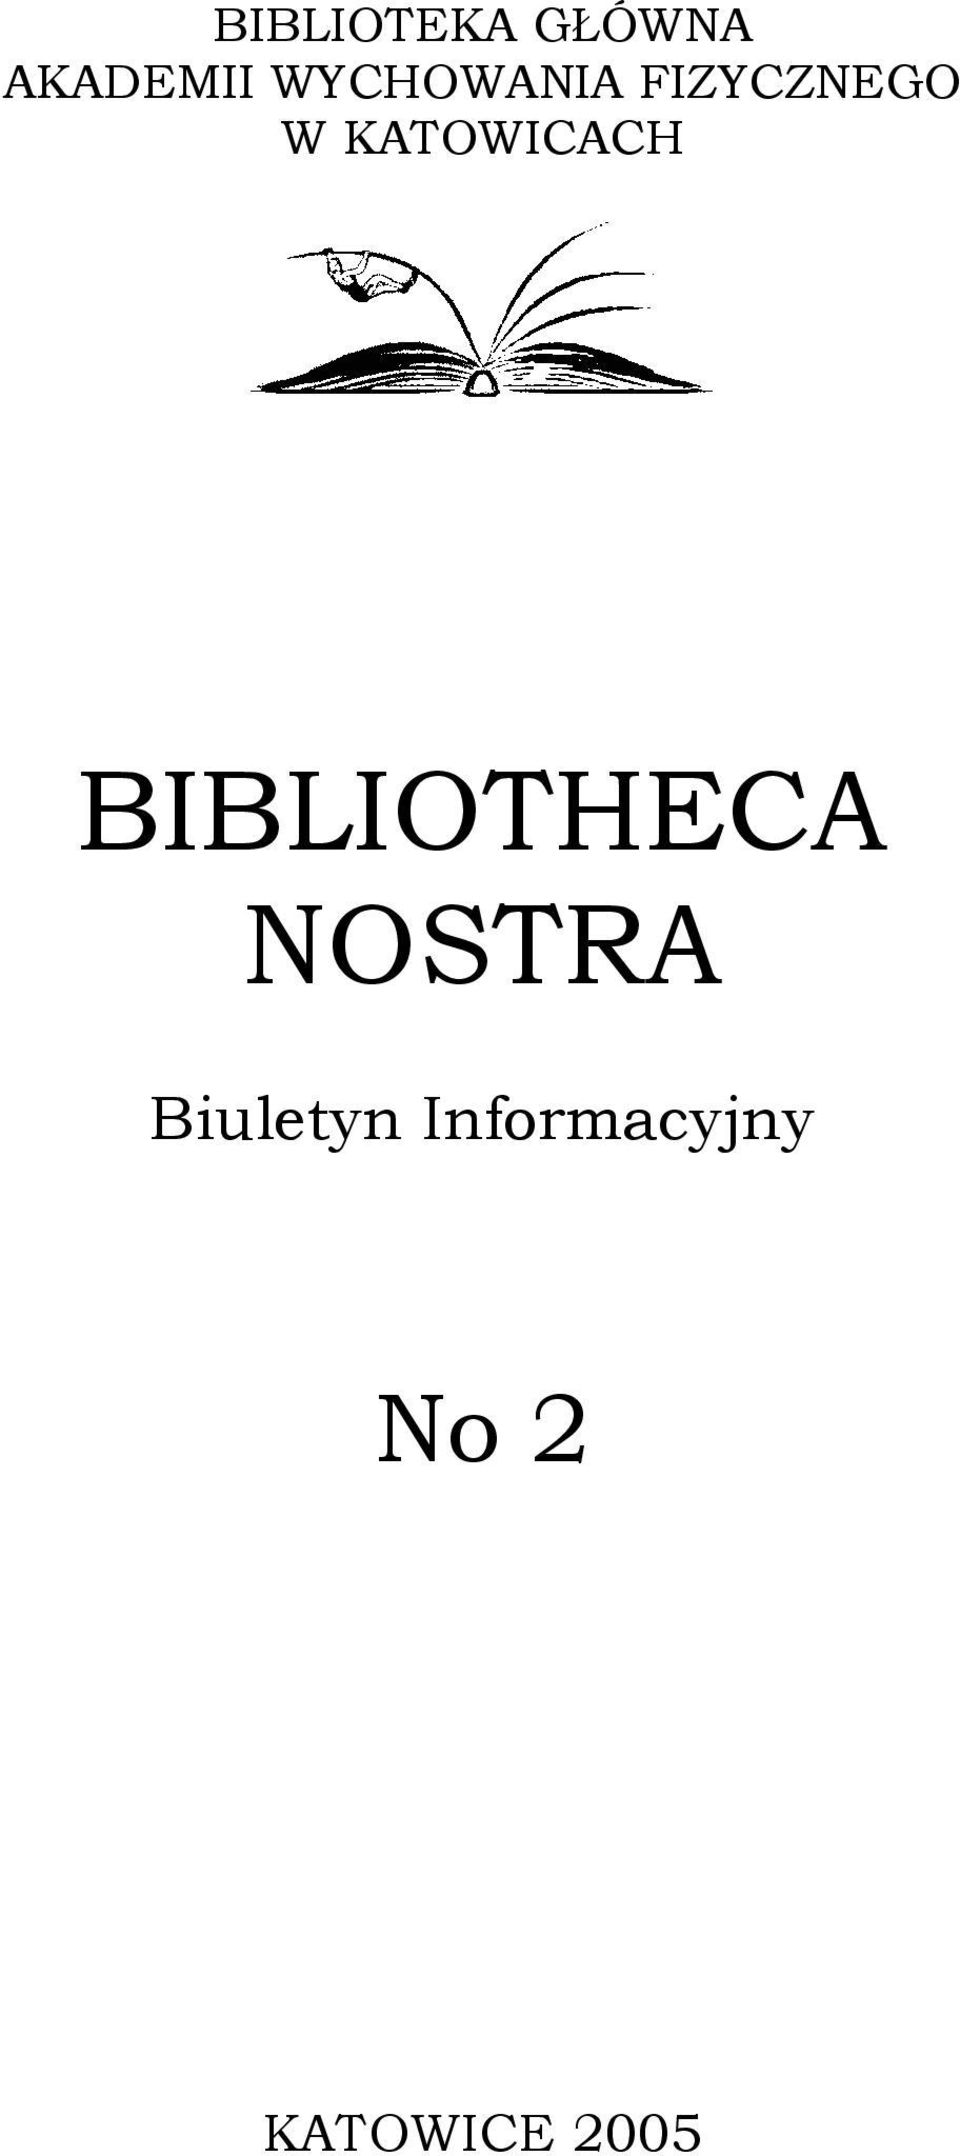 KATOWICACH BIBLIOTHECA NOSTRA